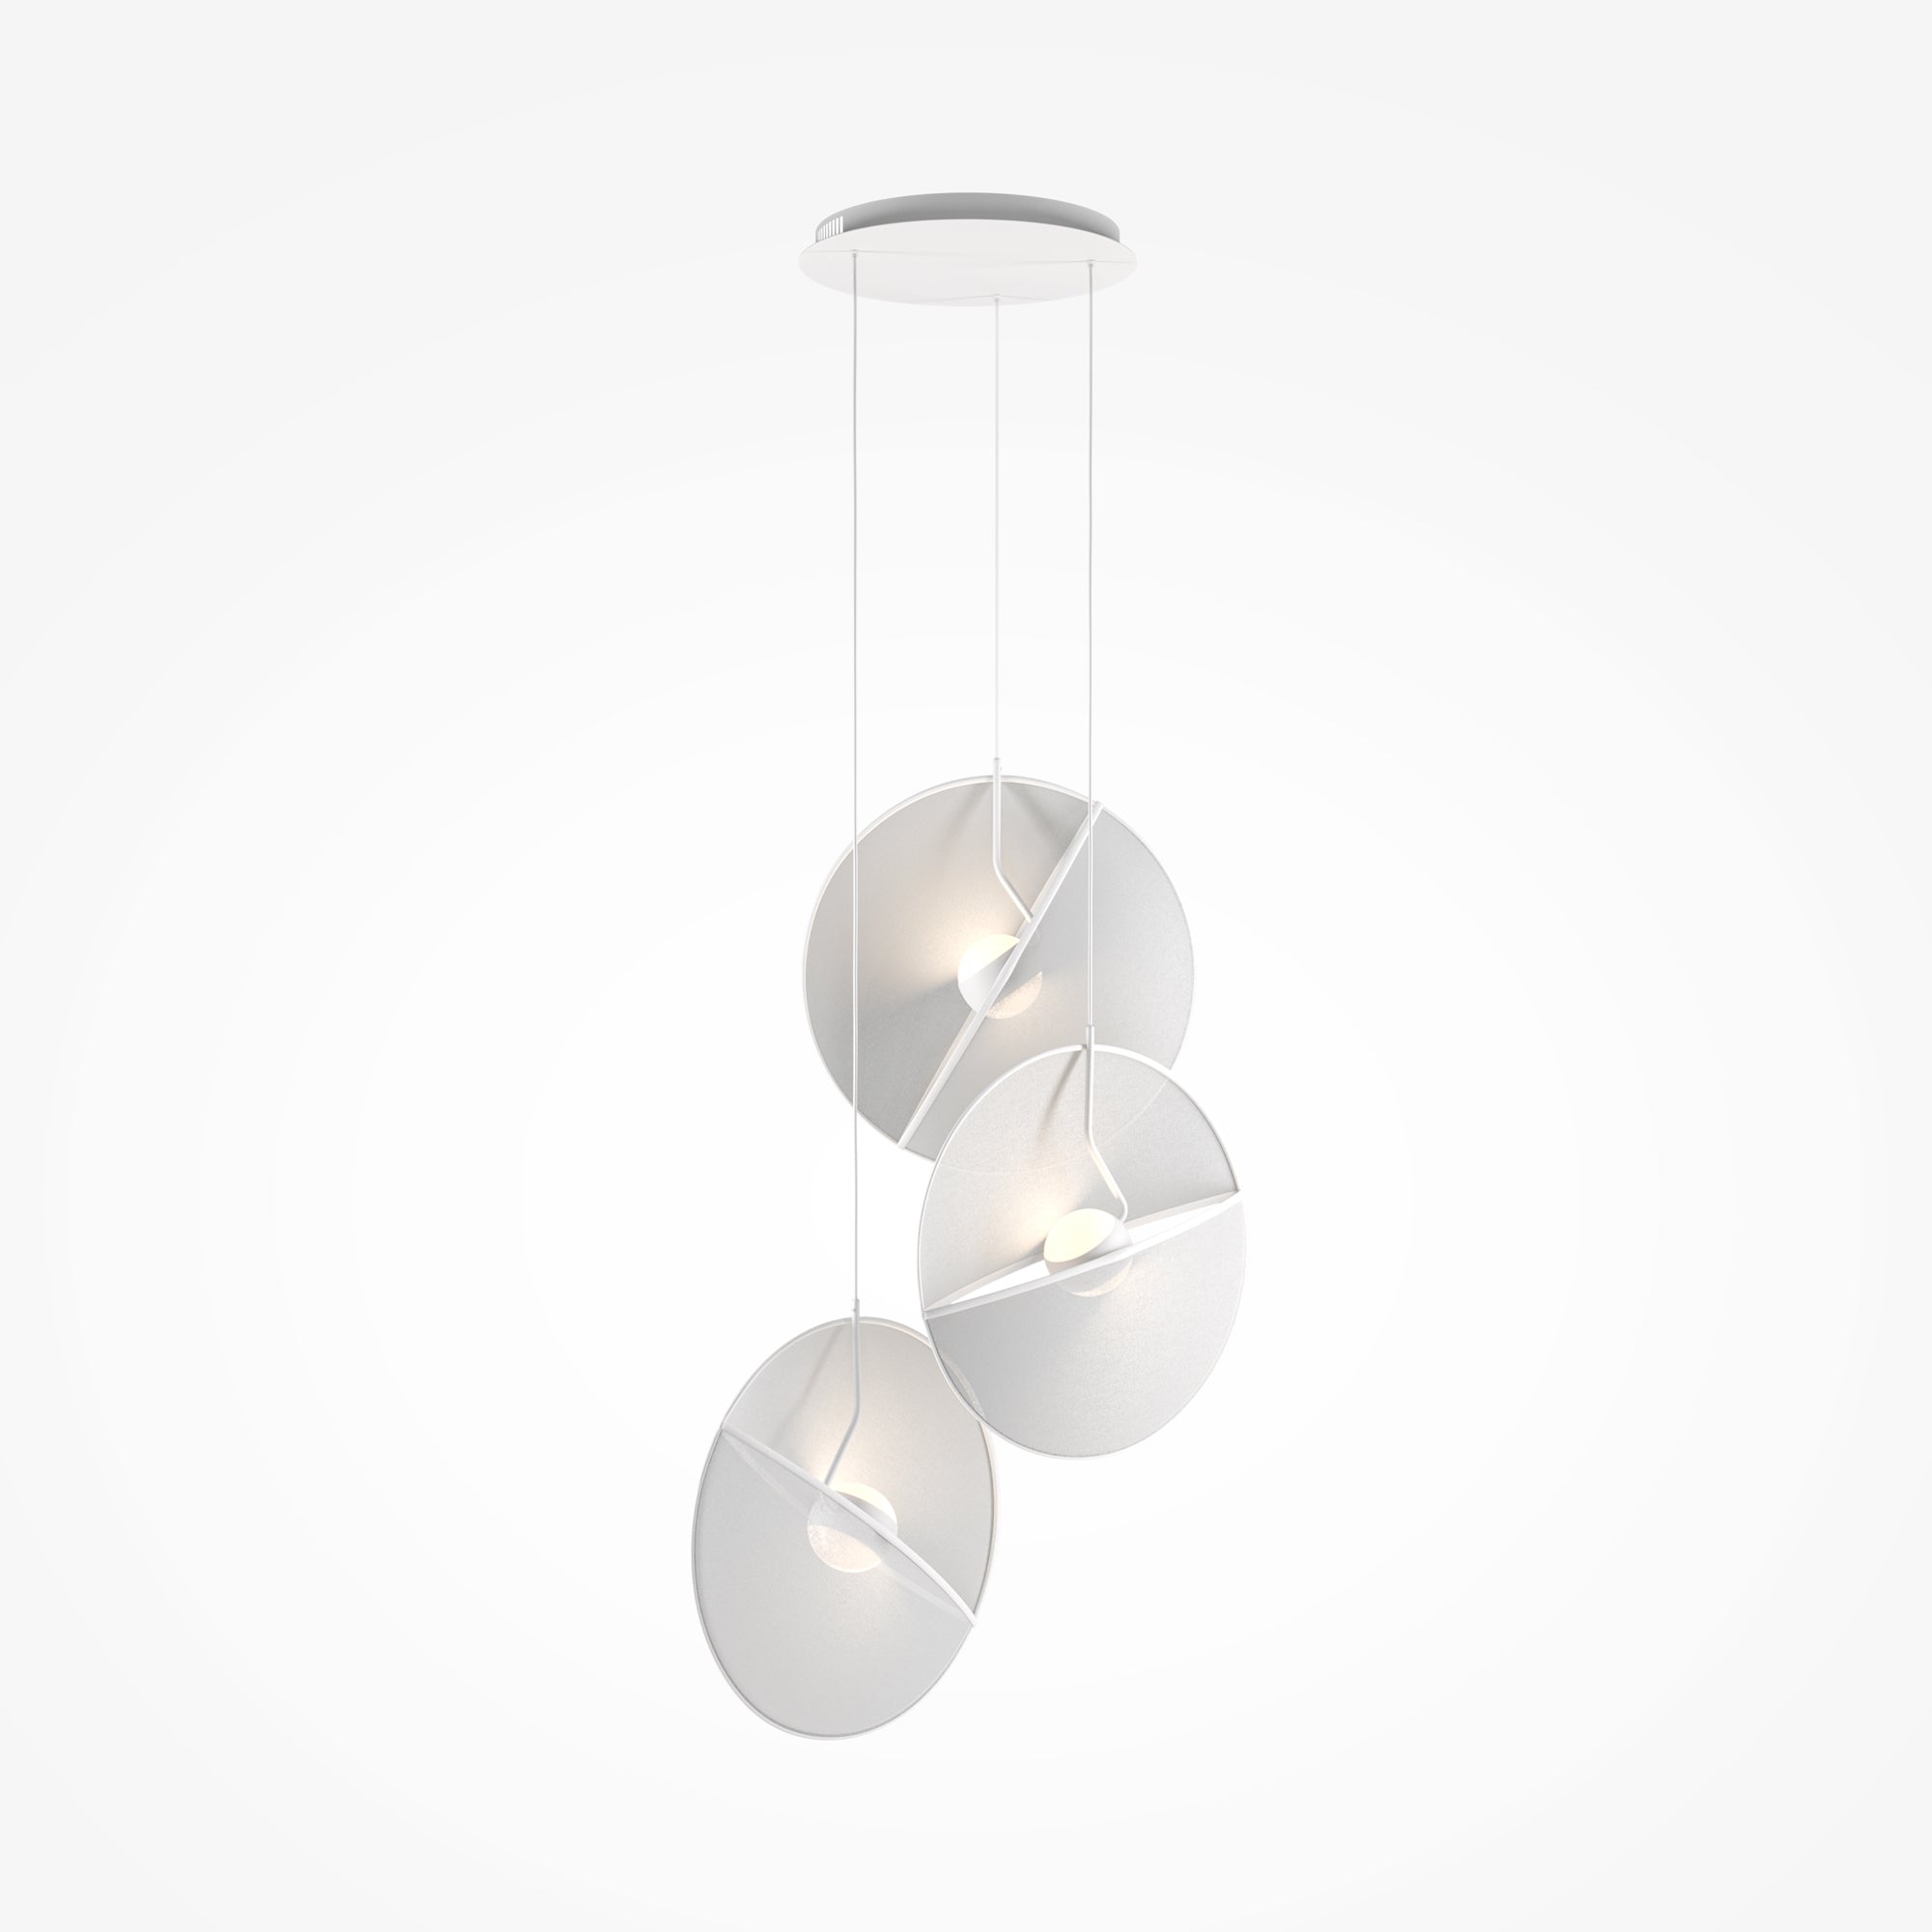 Reflex 2/6Lt LED Hanging Light - White Finish